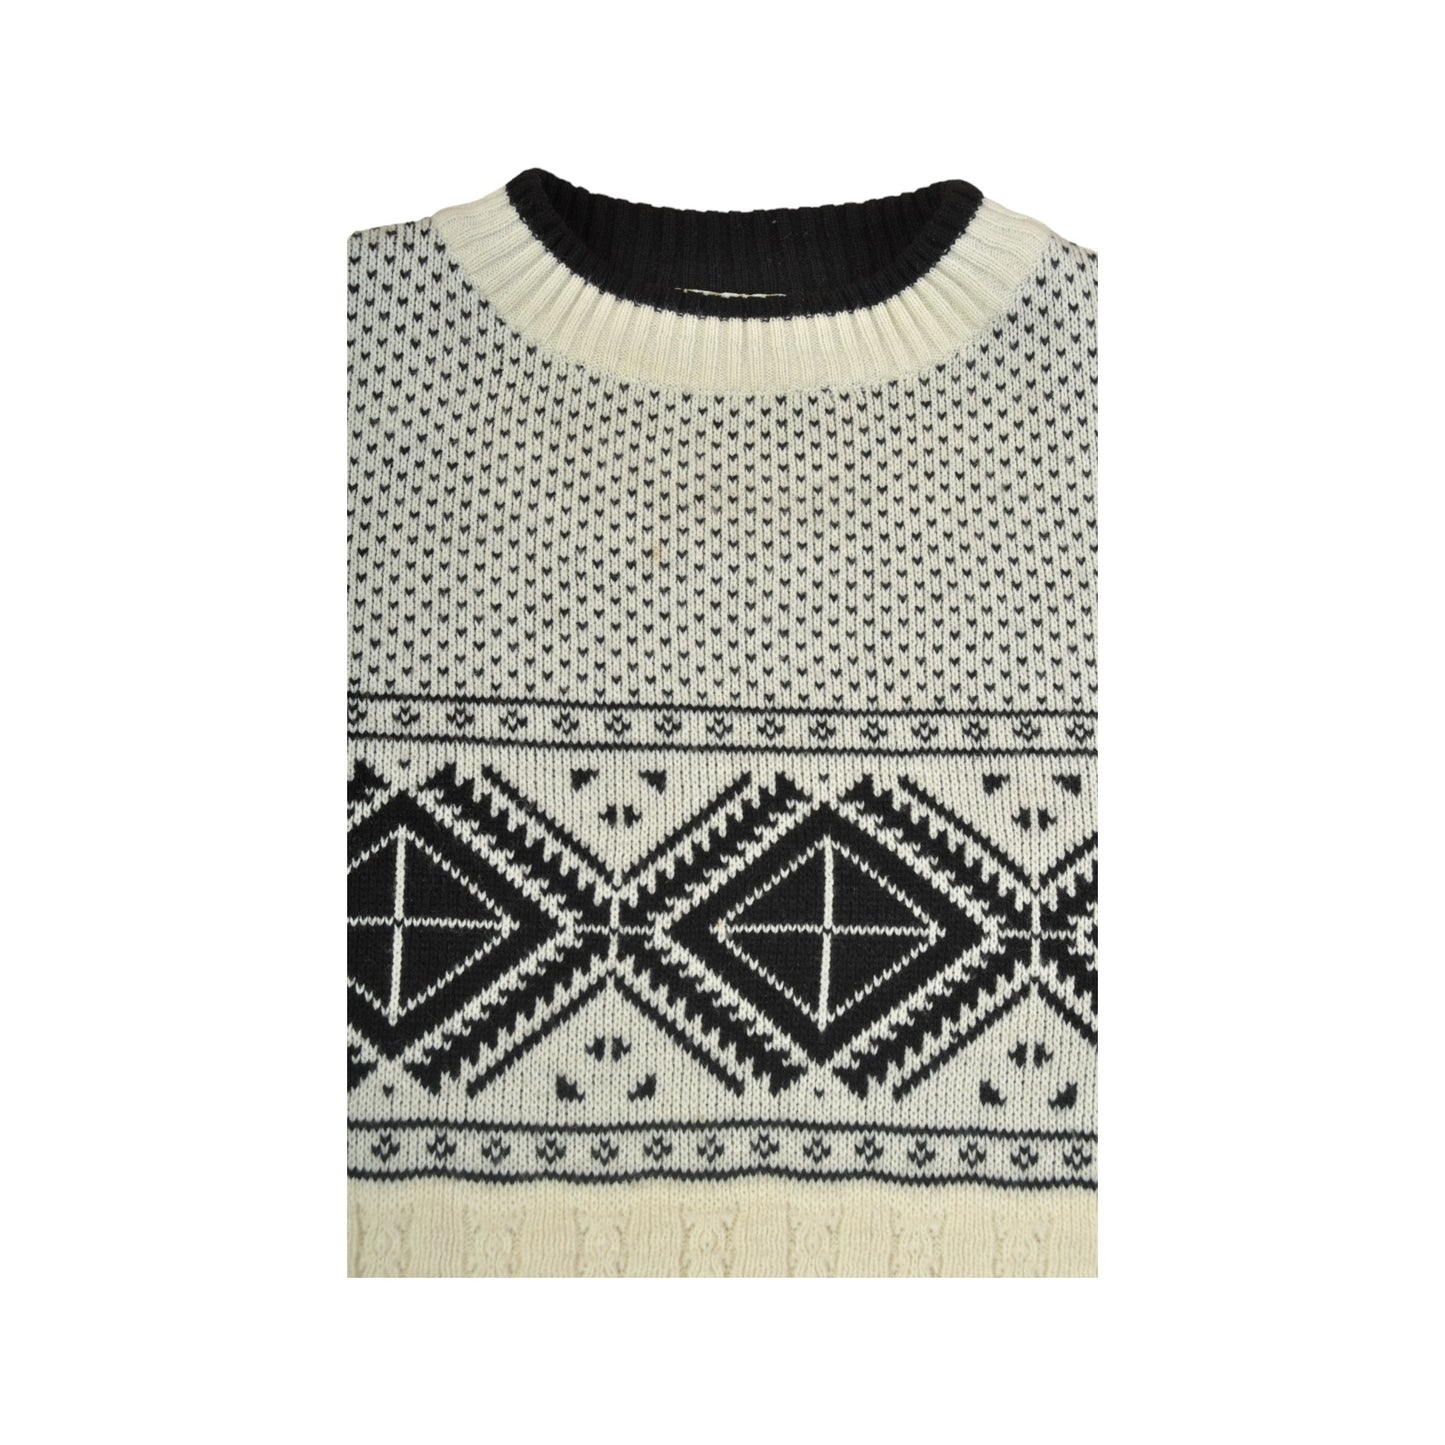 Vintage Knitwear Sweater Nordic Pattern Ladies Medium